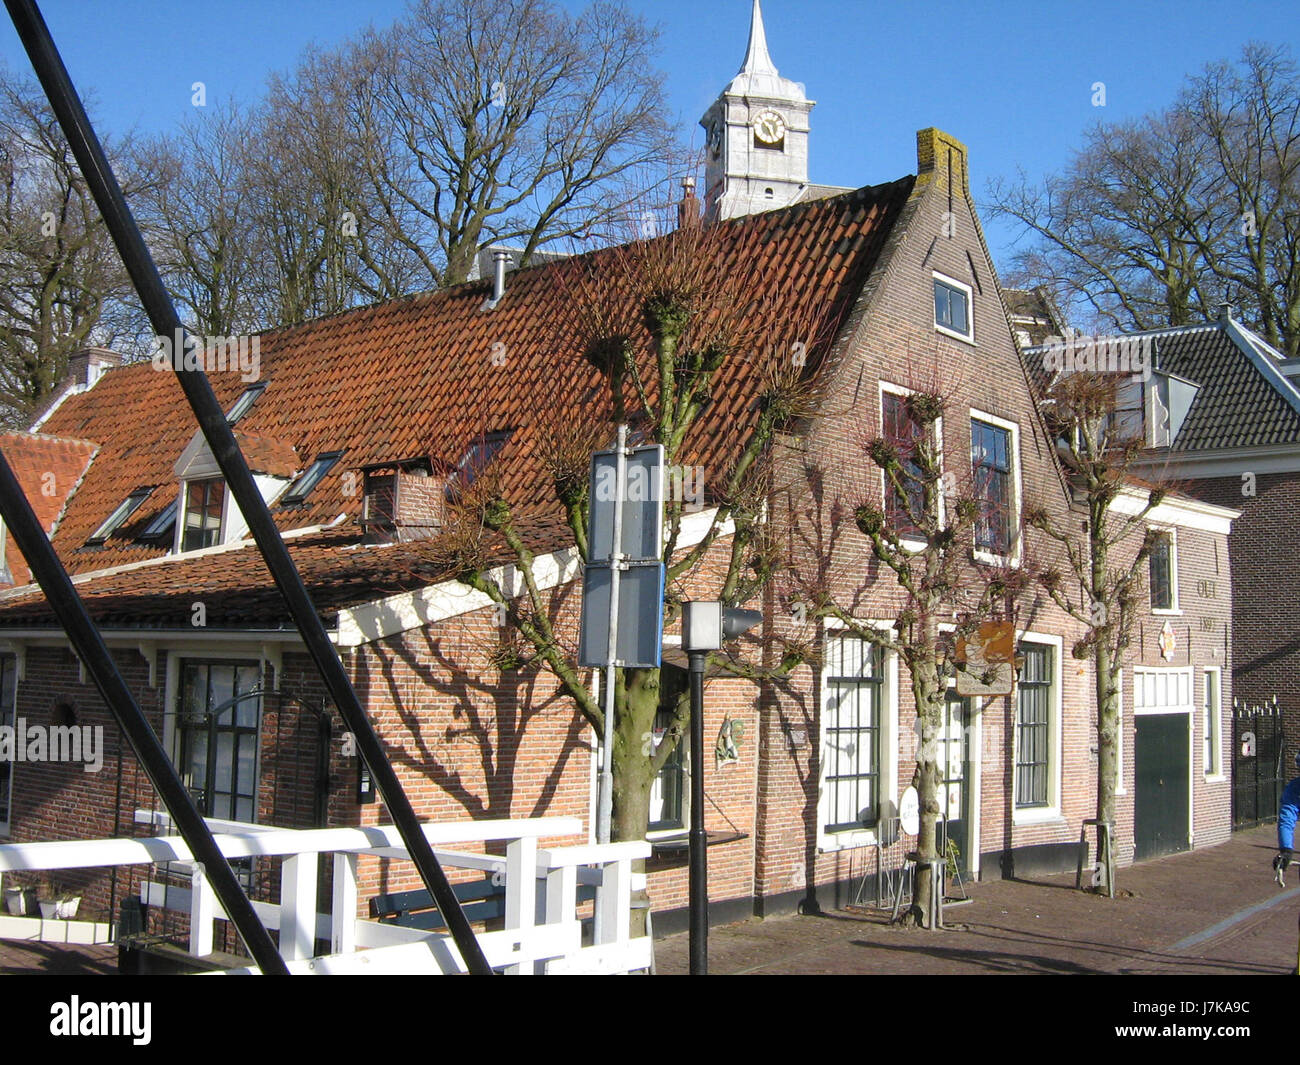 1 Kerkstraat Ouderkerk aan de Amstel Netherlands Stock Photo